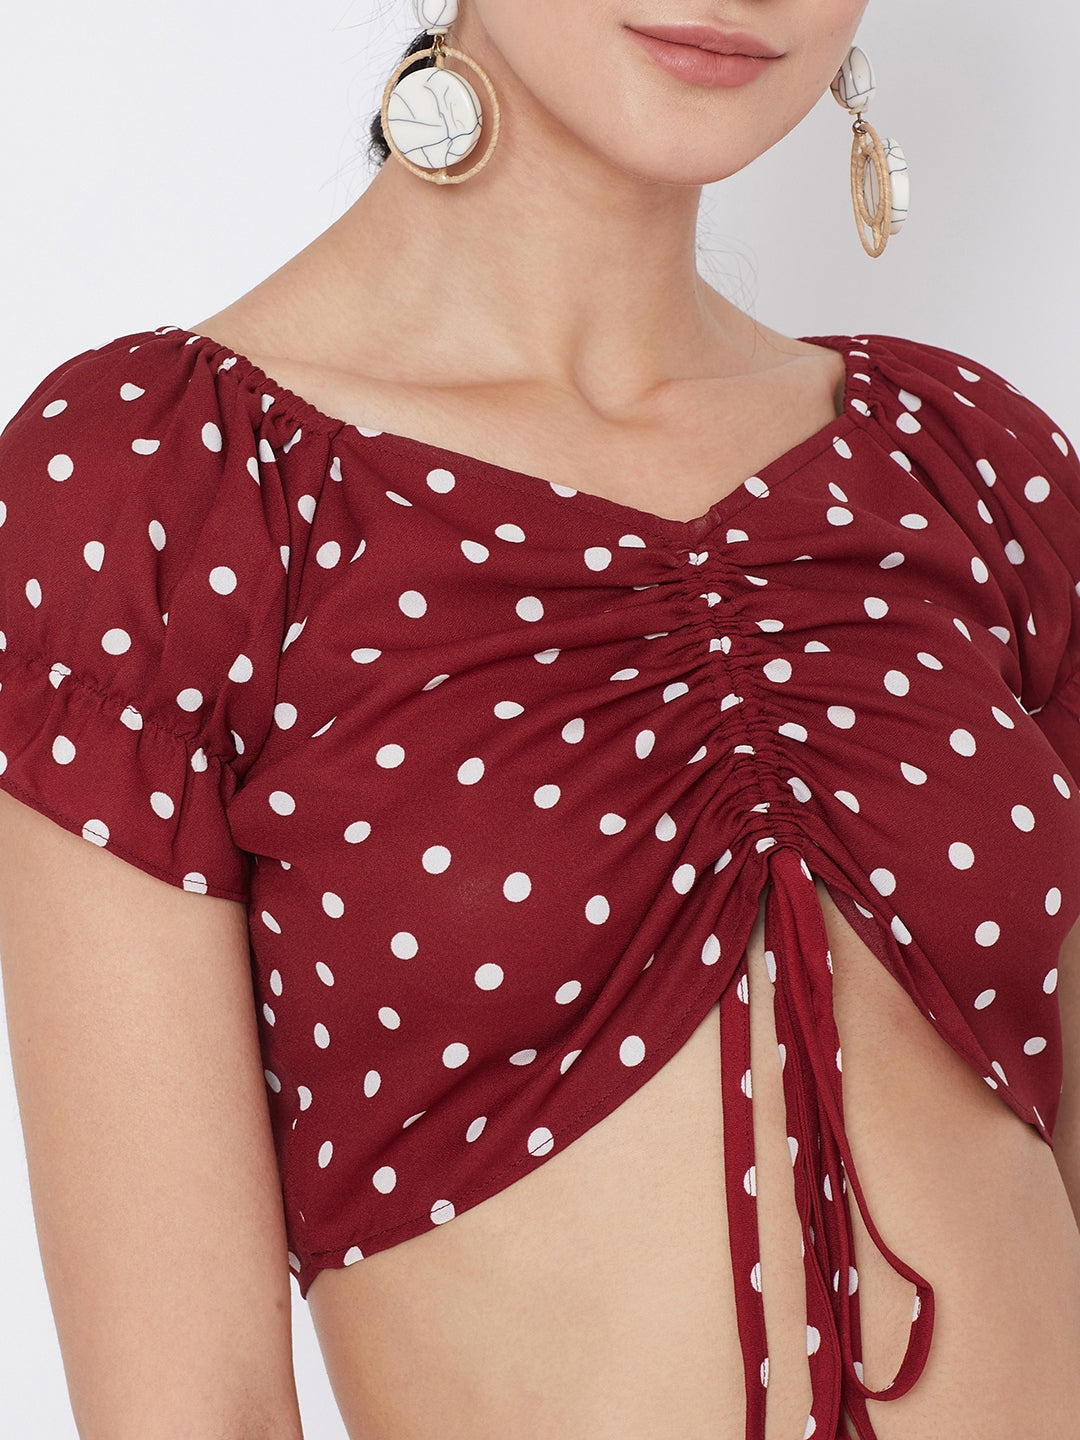 Polka Dot Printed Crop Top and Skirt Set